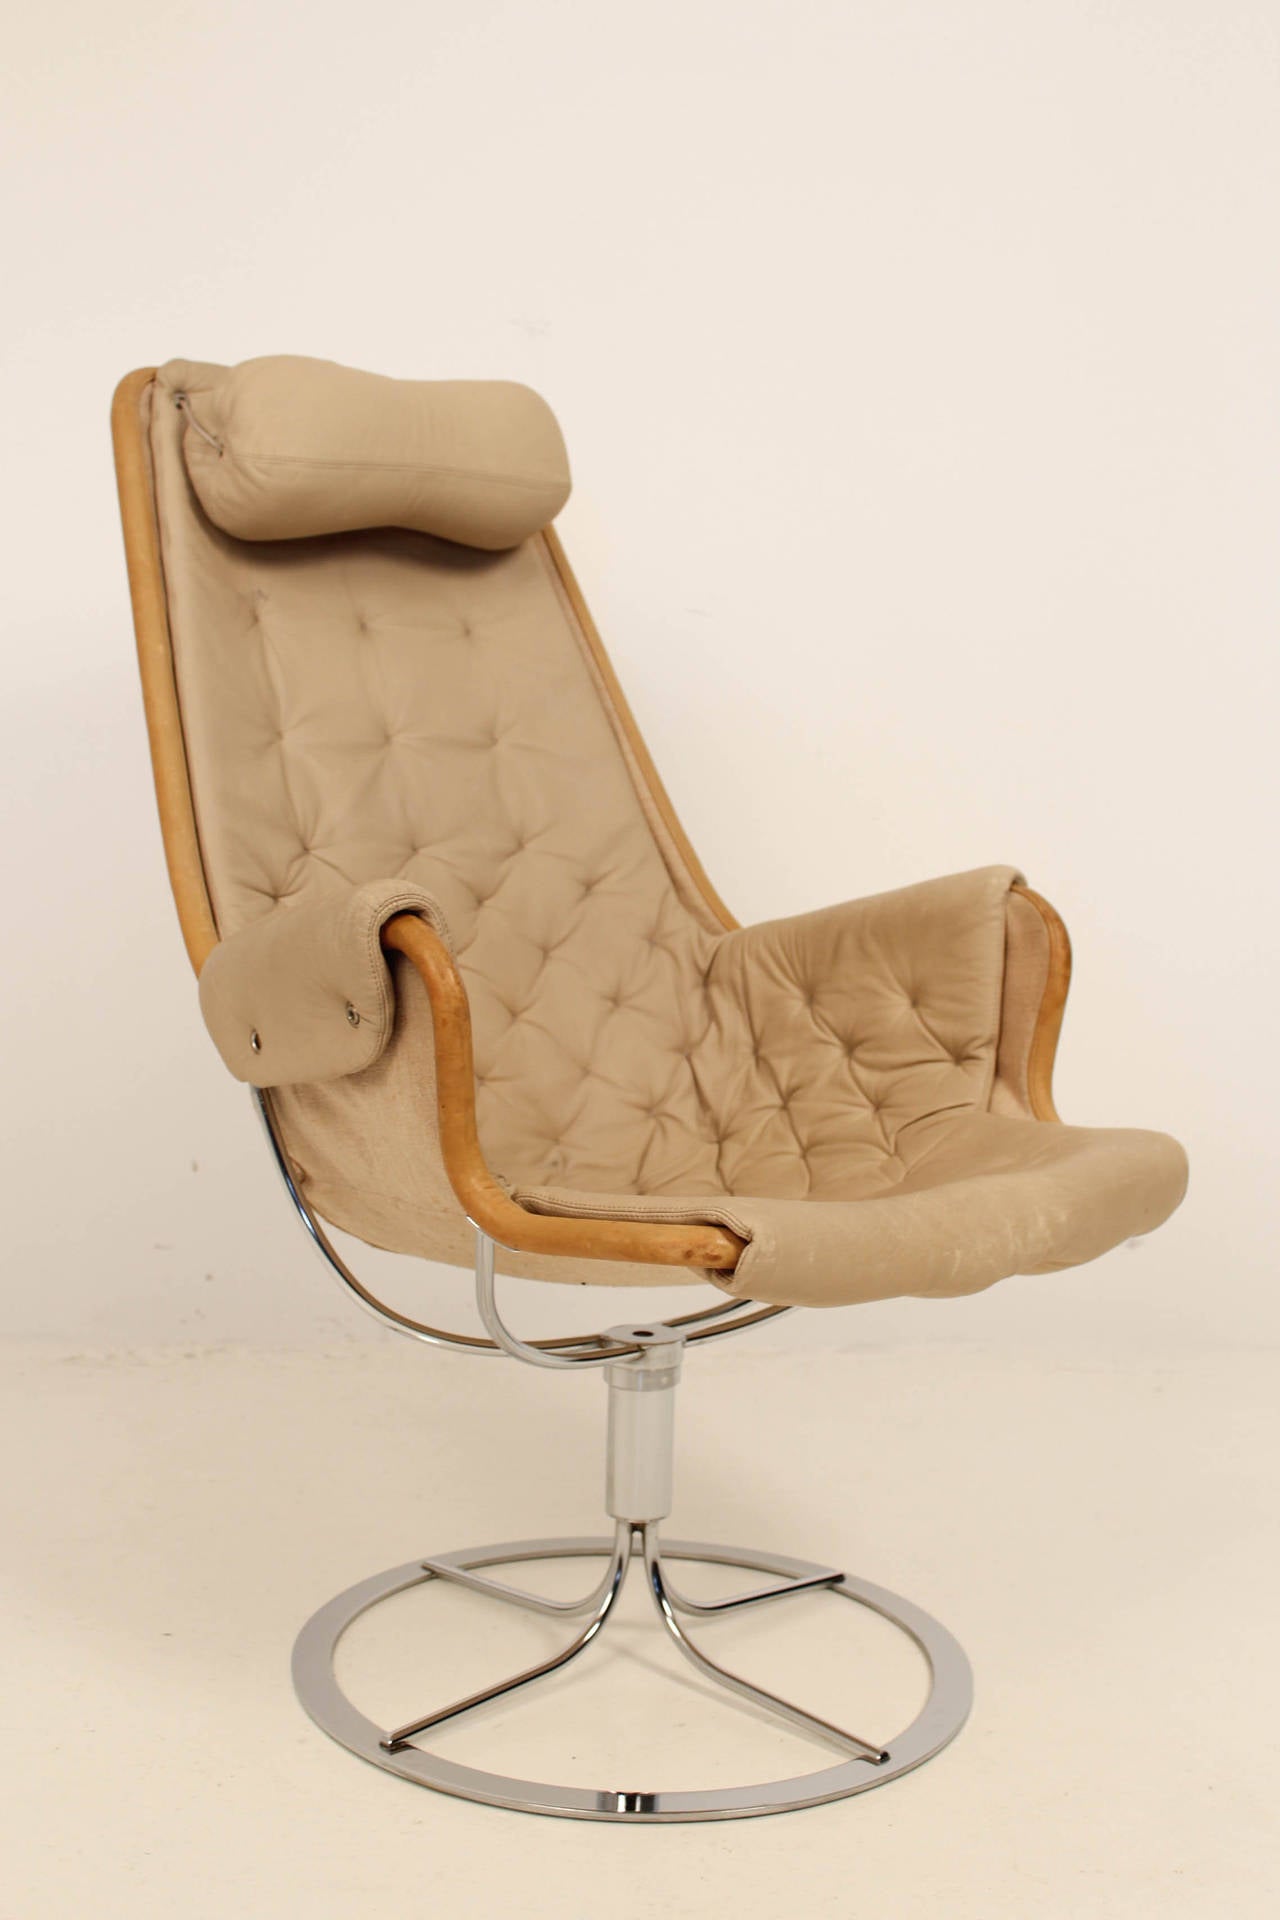 dux jetson chair